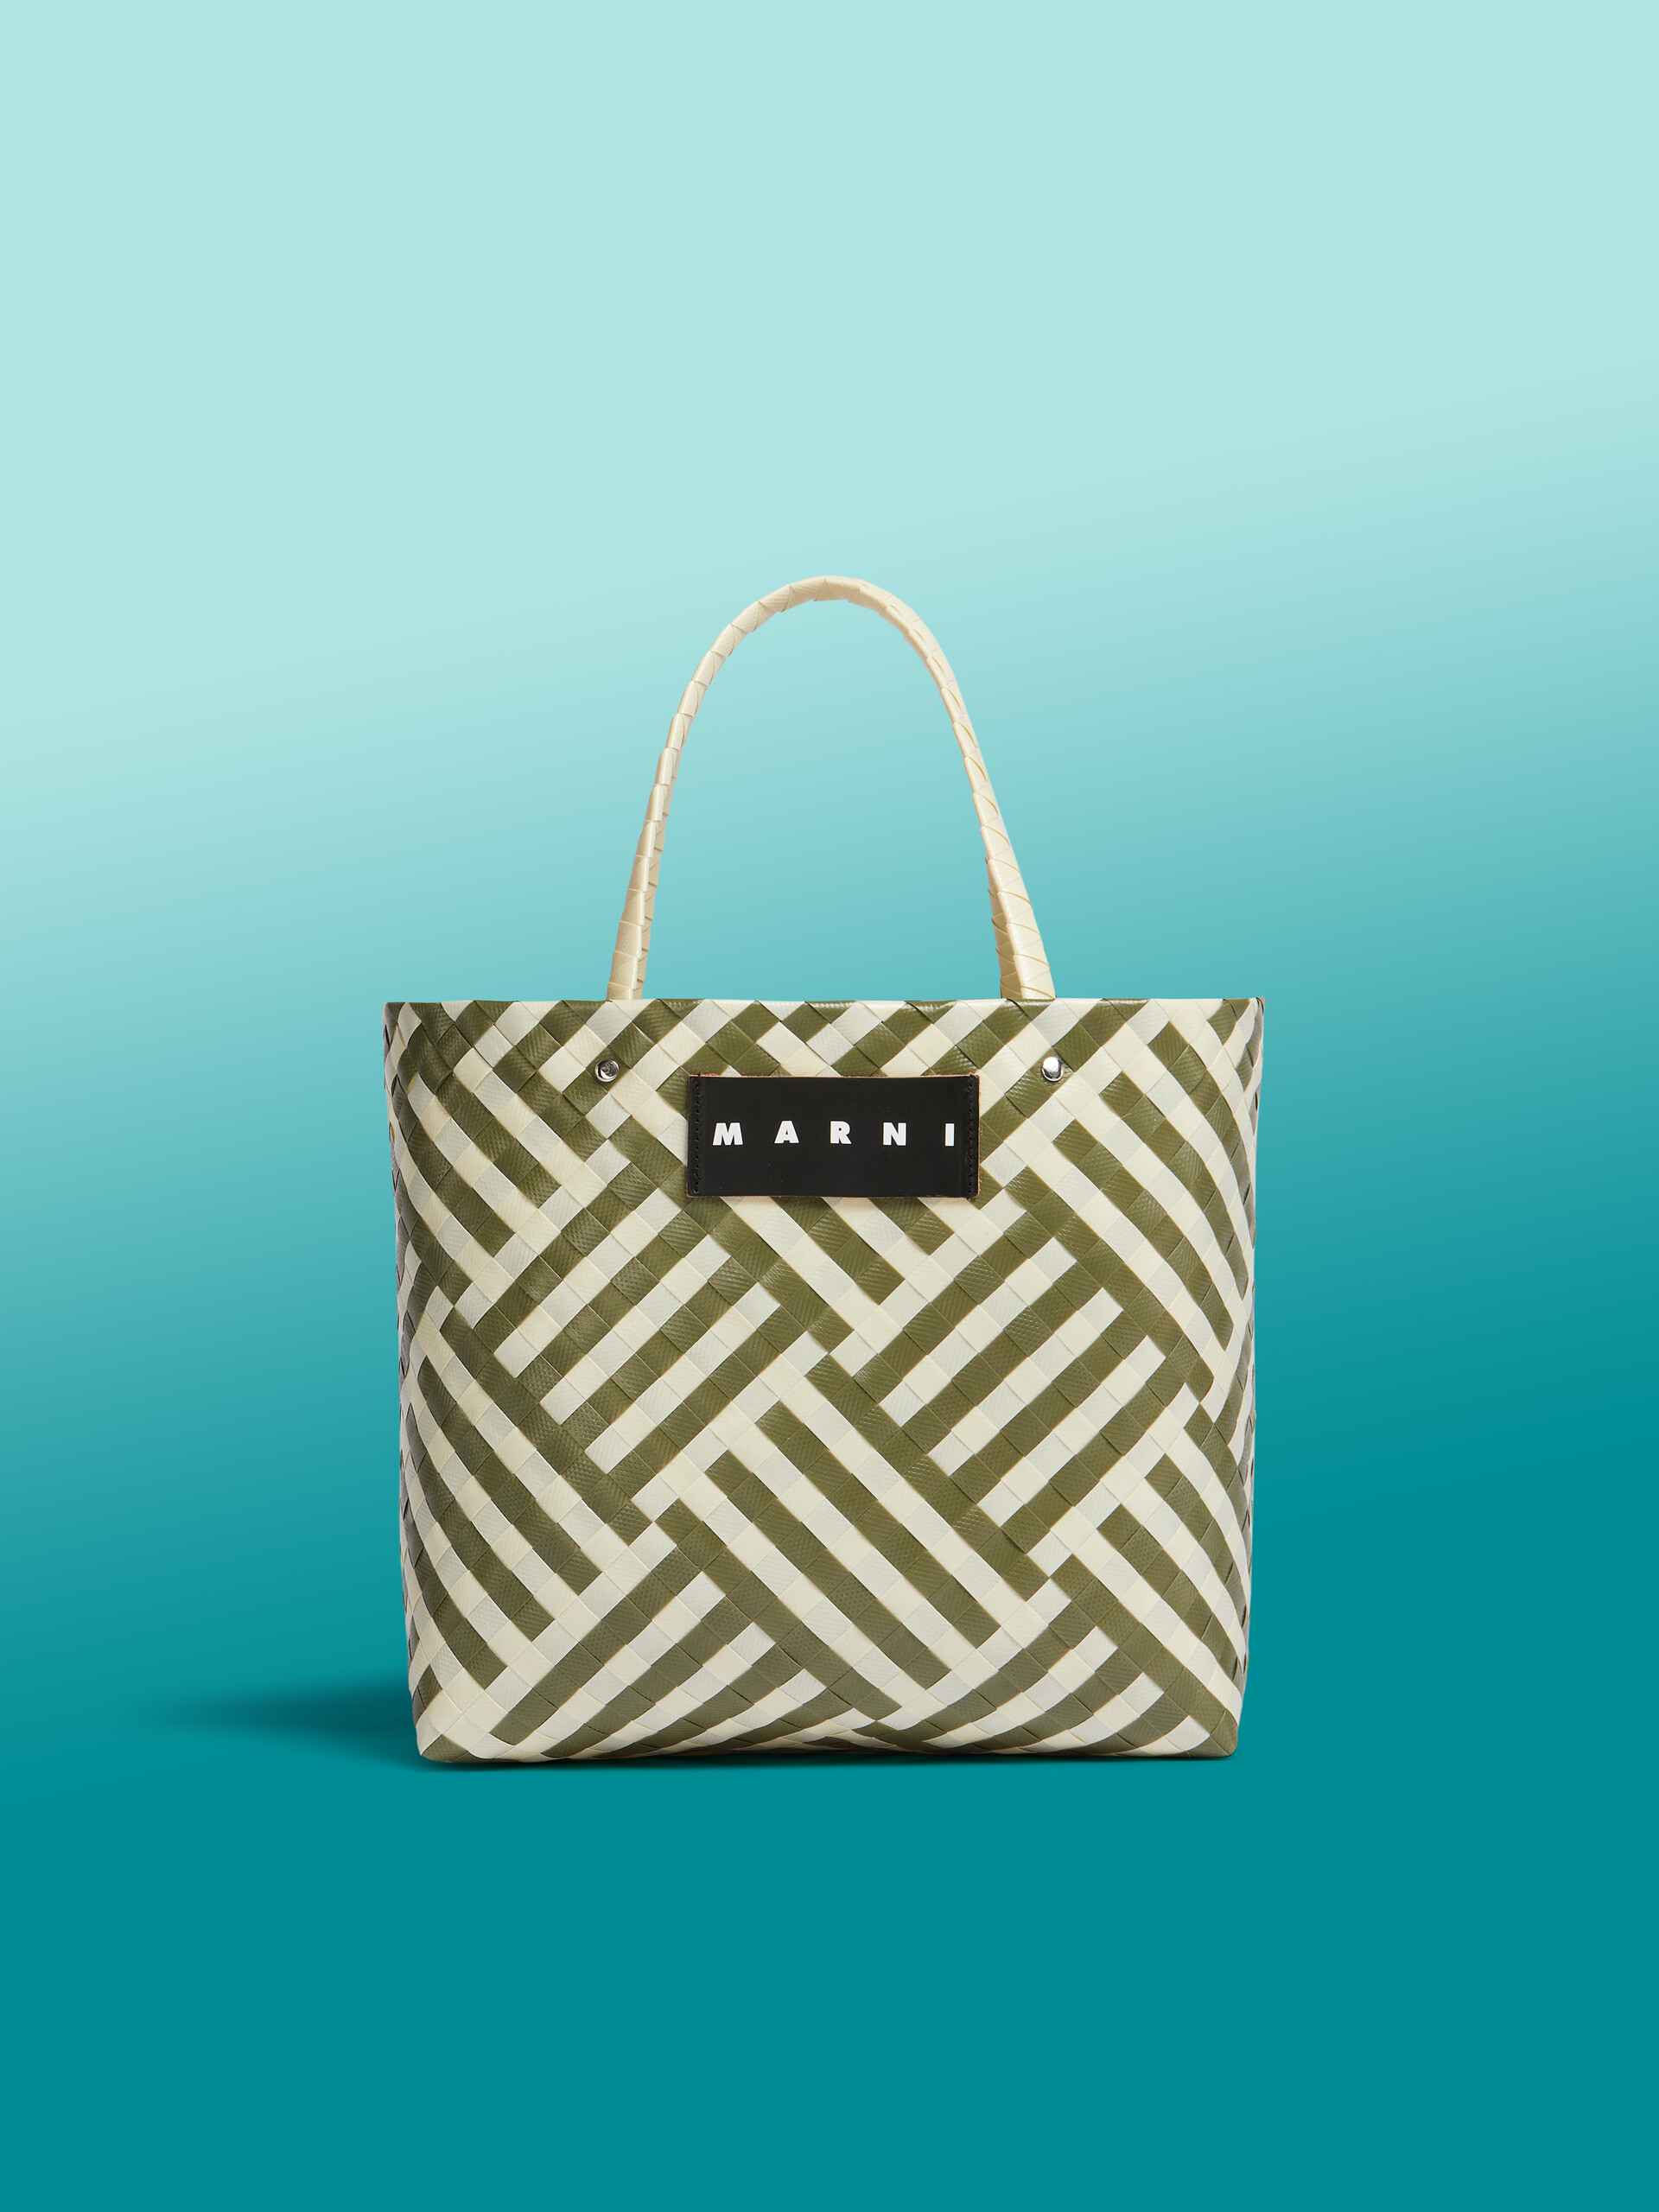 Green and white MARNI MARKET CHECK BASKET bag - Shopping Bags - Image 1